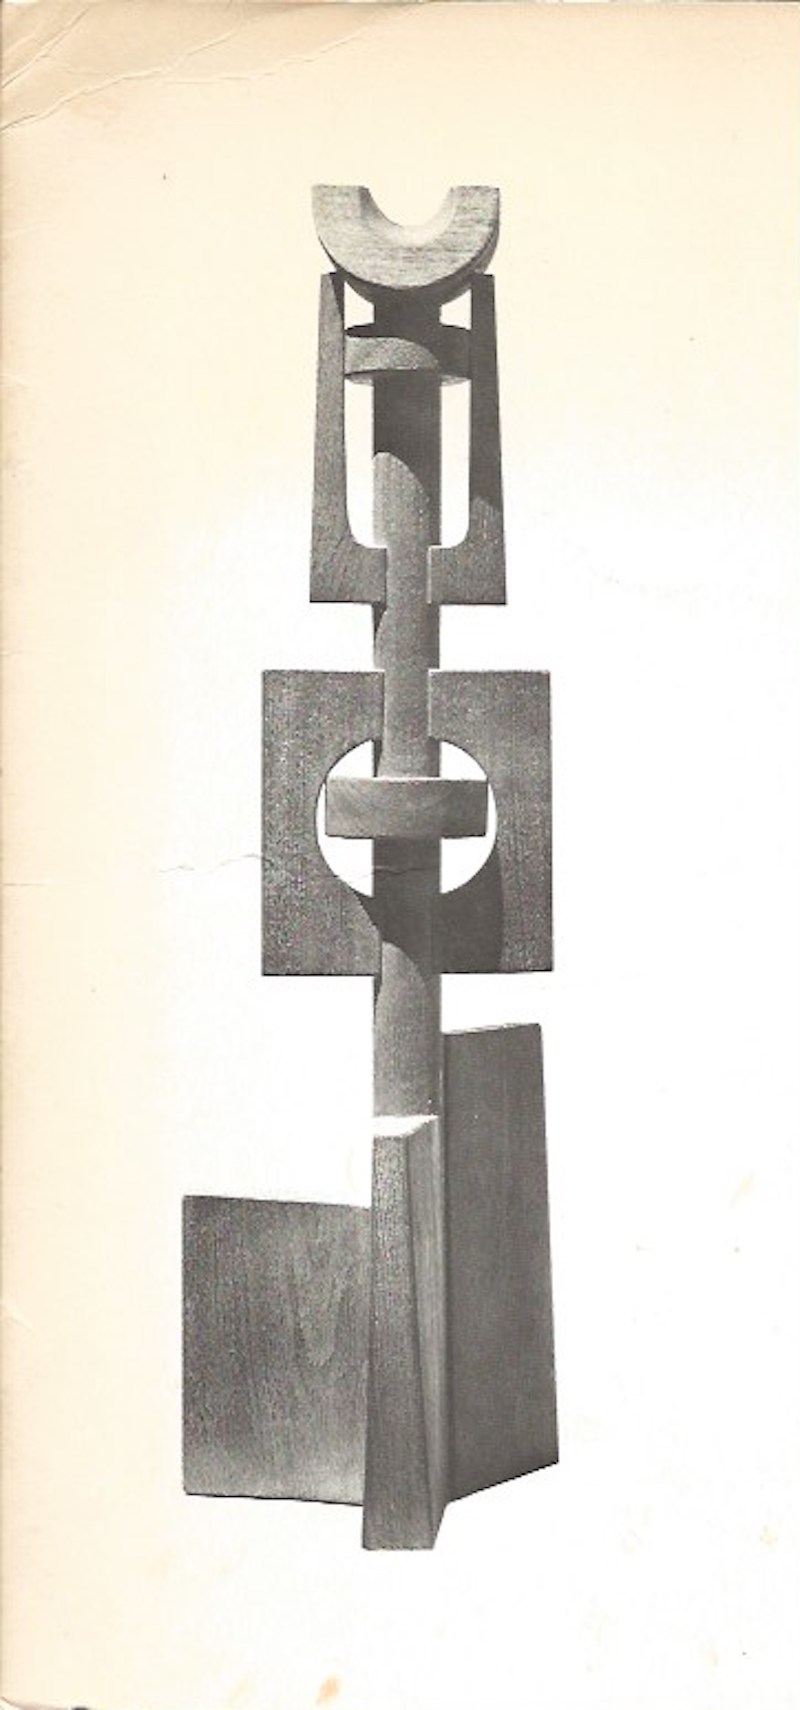 Clifford Last Sculpture 1972-1974 by Eliot, T.S.